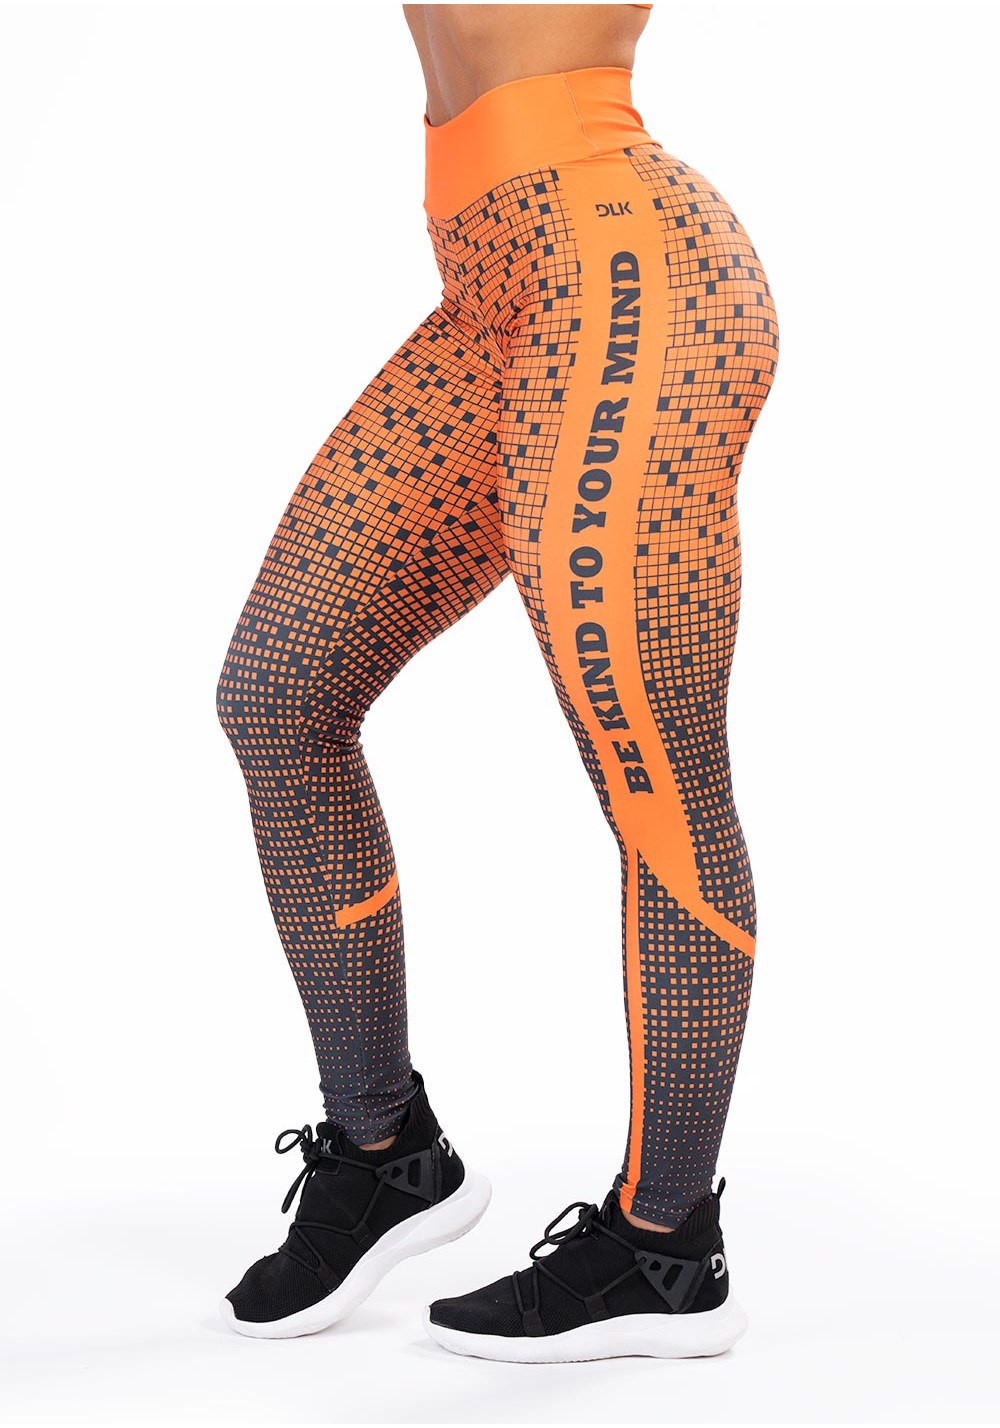 https://dlkmodas.fbitsstatic.net/img/p/legging-fitness-feminina-new-printed-estampada-gradiente-square-laranja-82302/304202.jpg?w=1000&h=1428&v=no-value